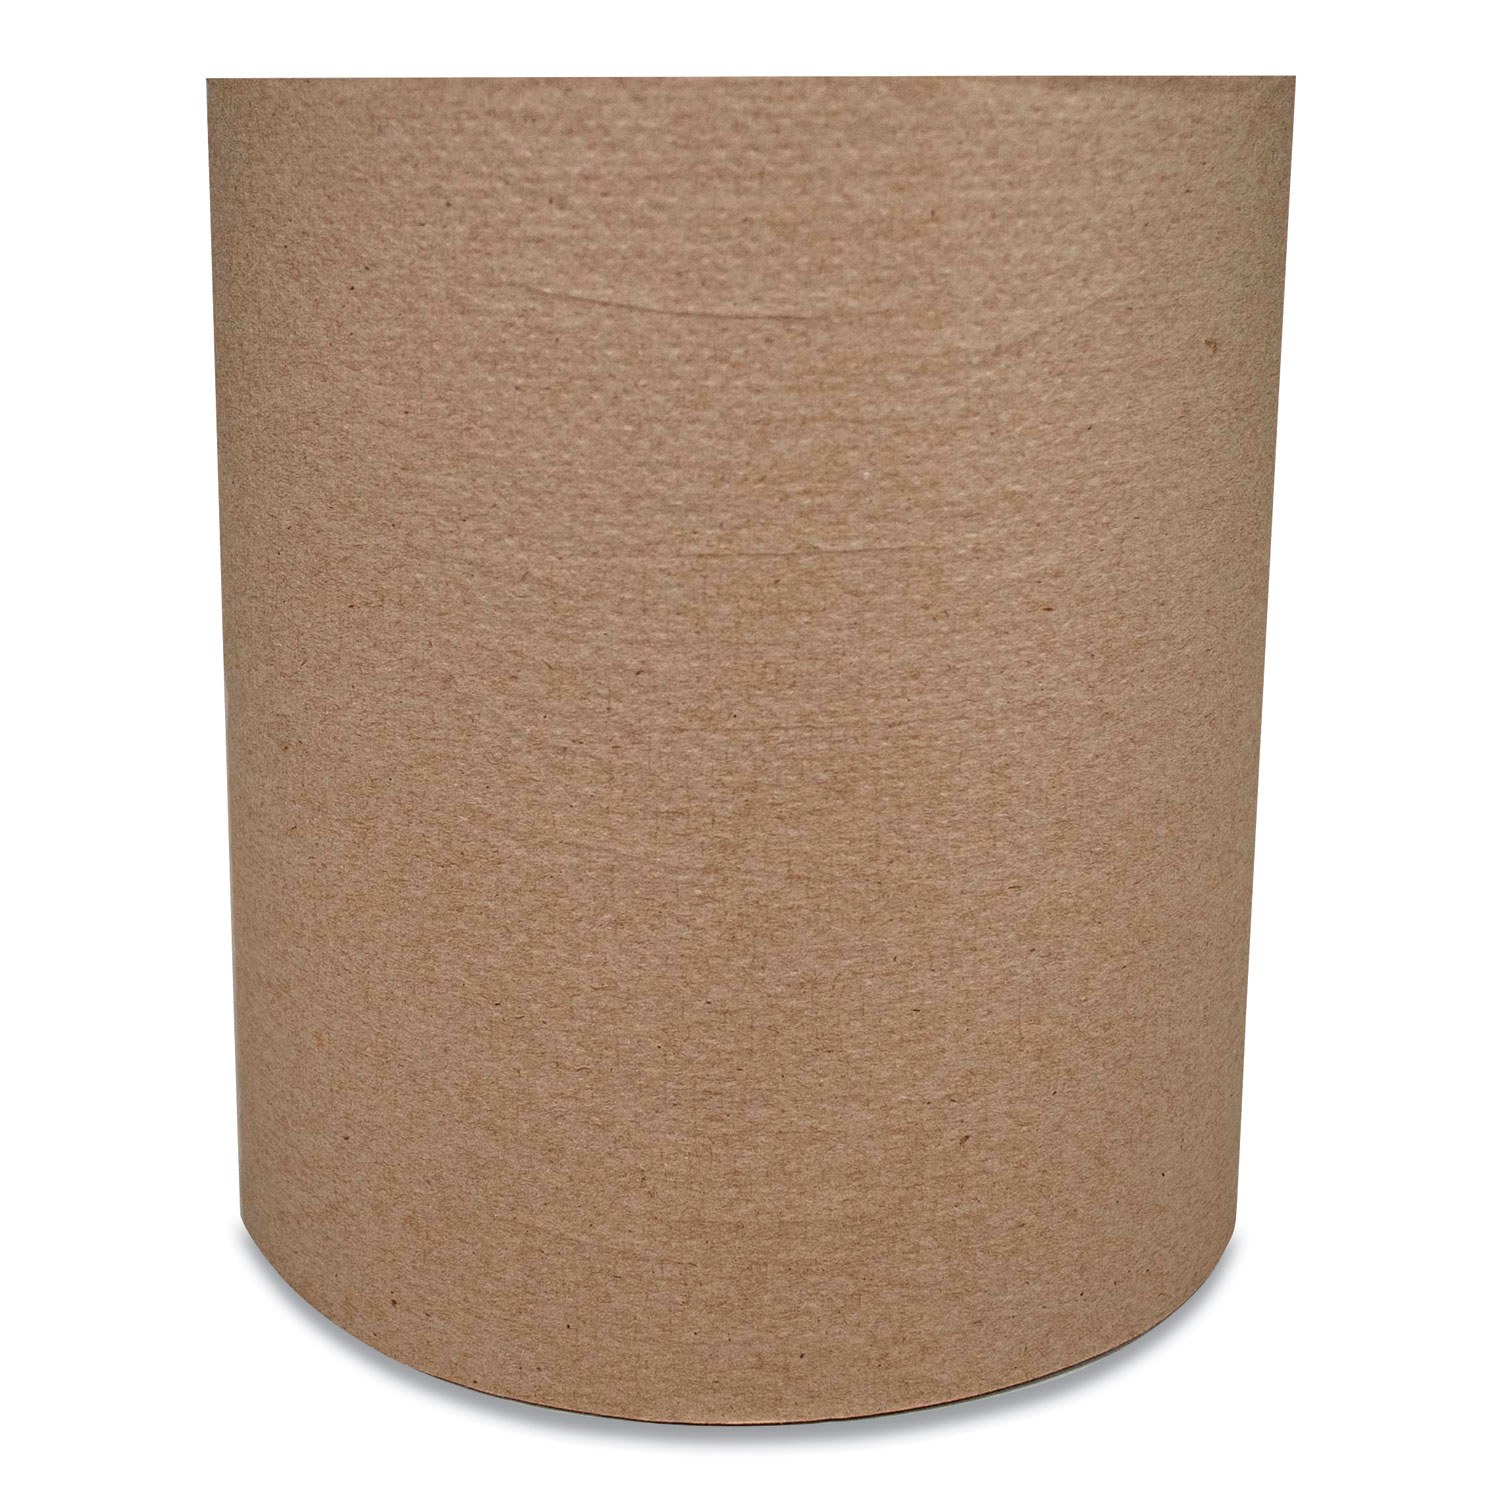  Morcon Tissue MOR R6800 Morsoft Universal Roll Towels, 8 x 800 ft, Brown, 6 Rolls/Carton (MORR6800) 